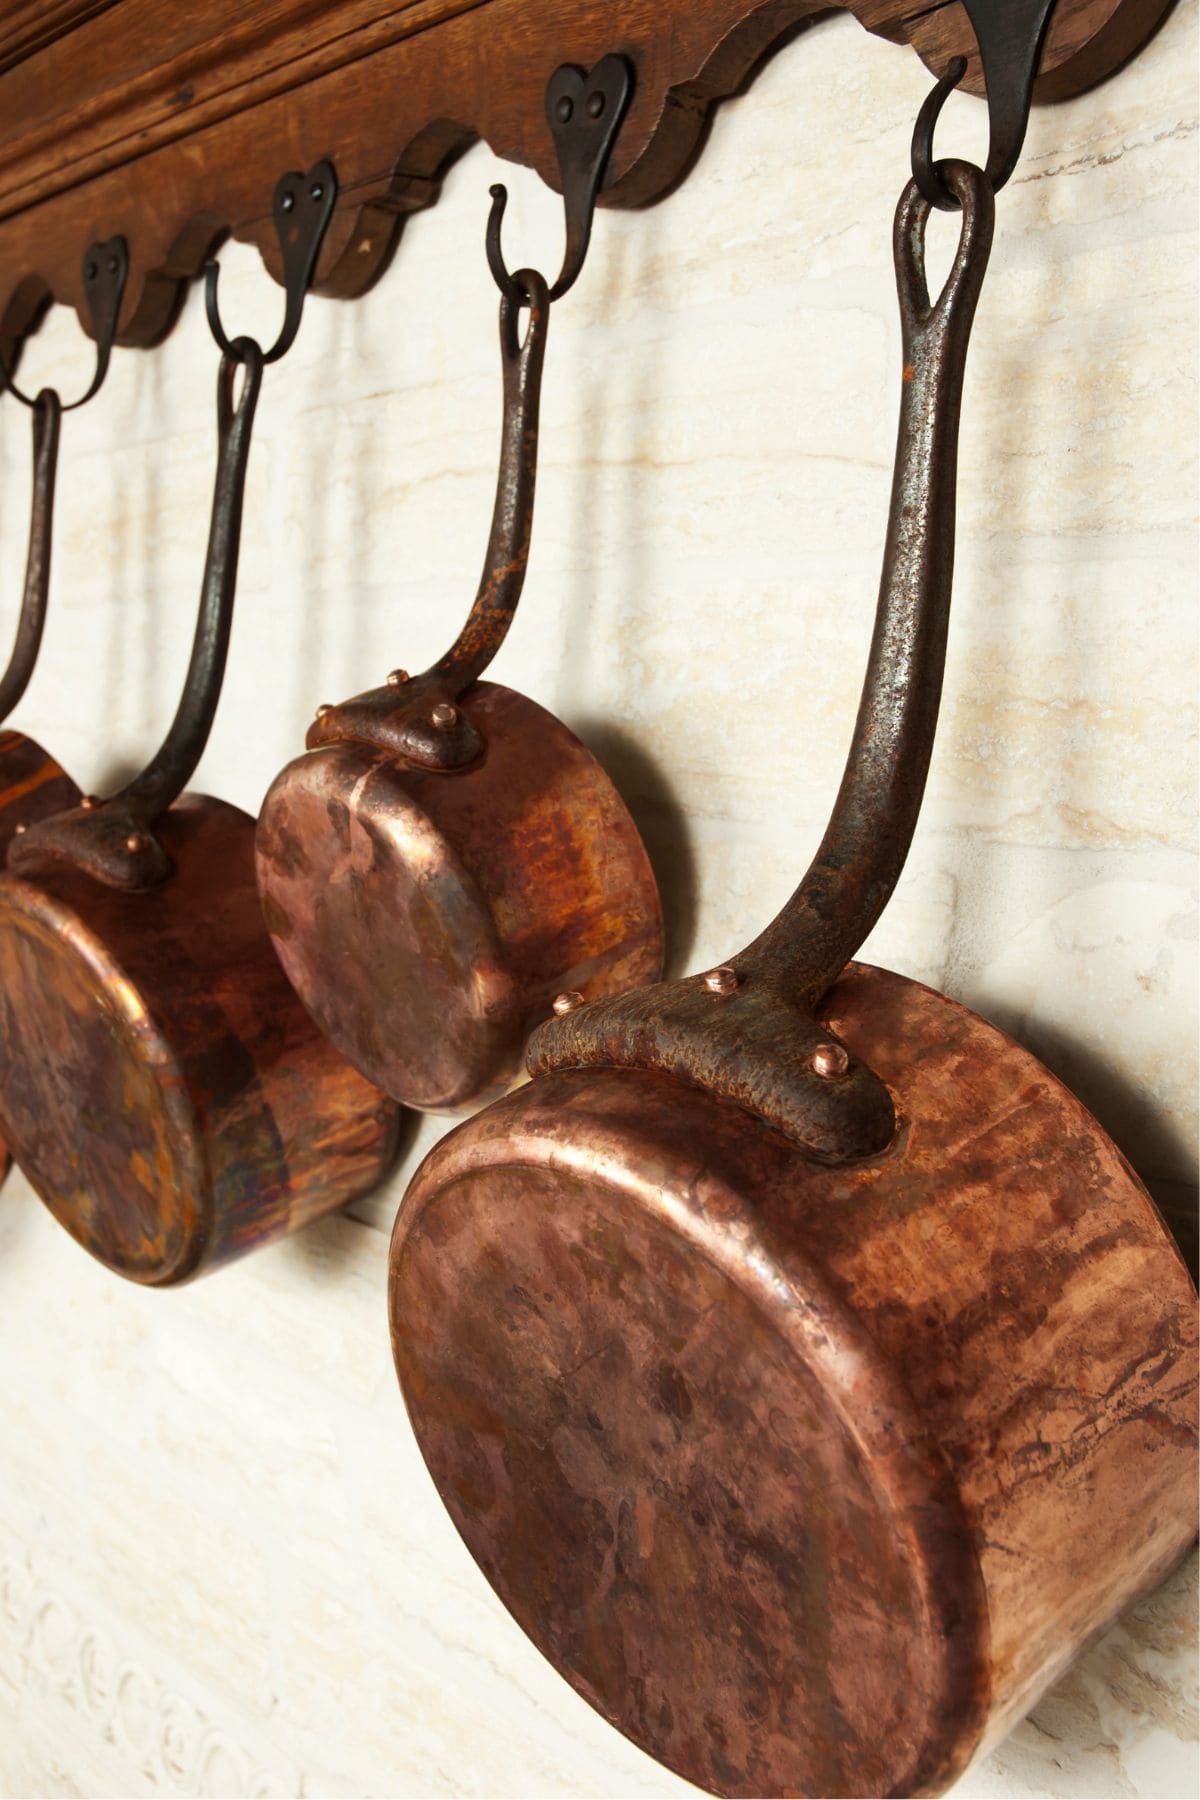 Copper saucepans hanging on hooks.